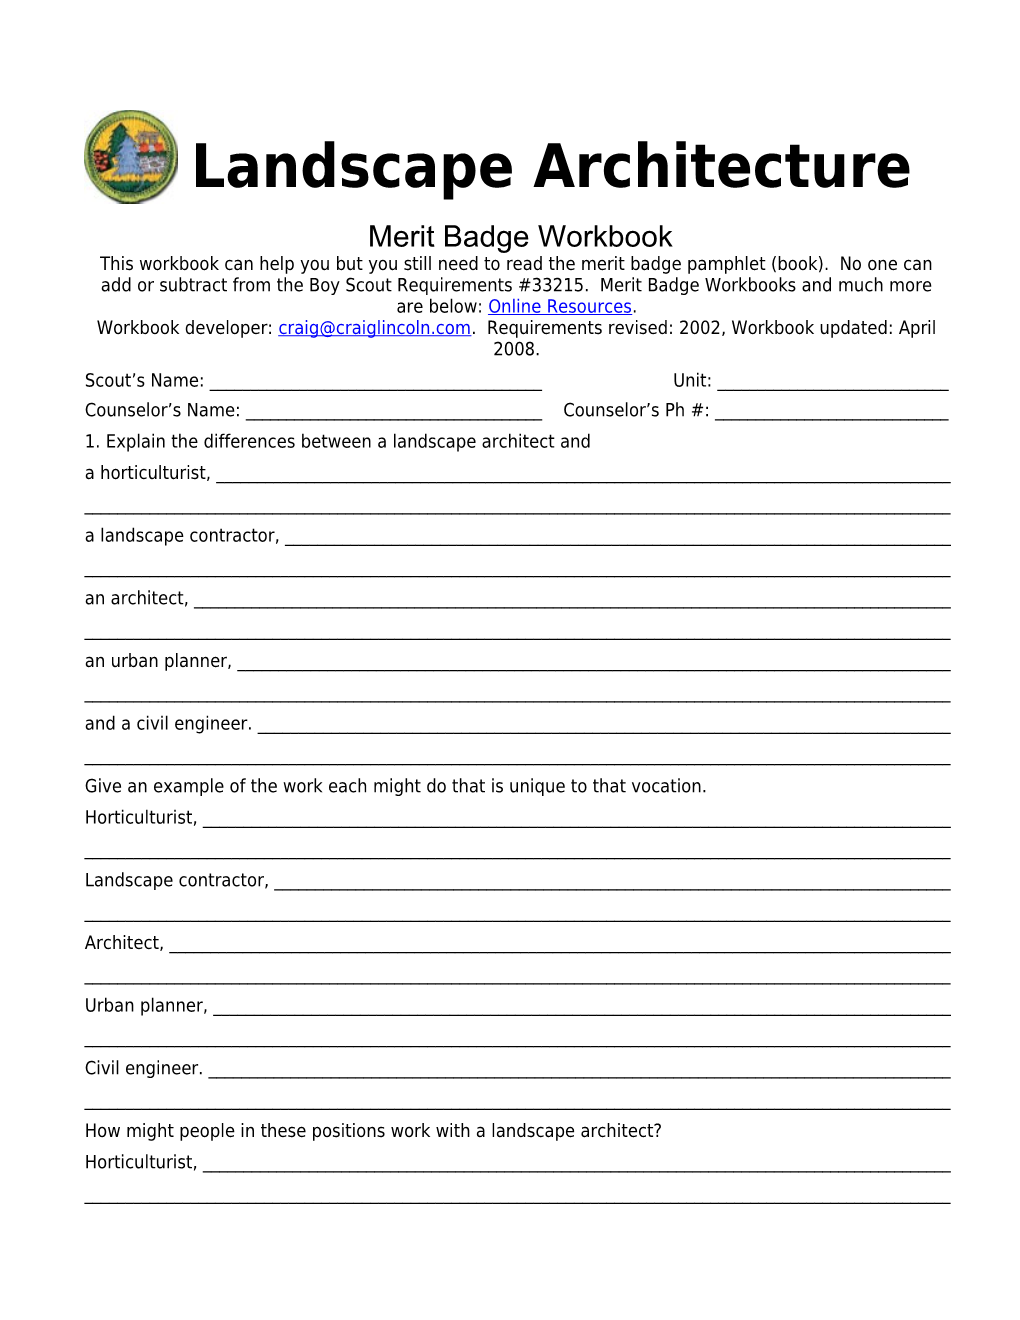 Landscape Architecture P. 4 Merit Badge Workbook Scout's Name: ______